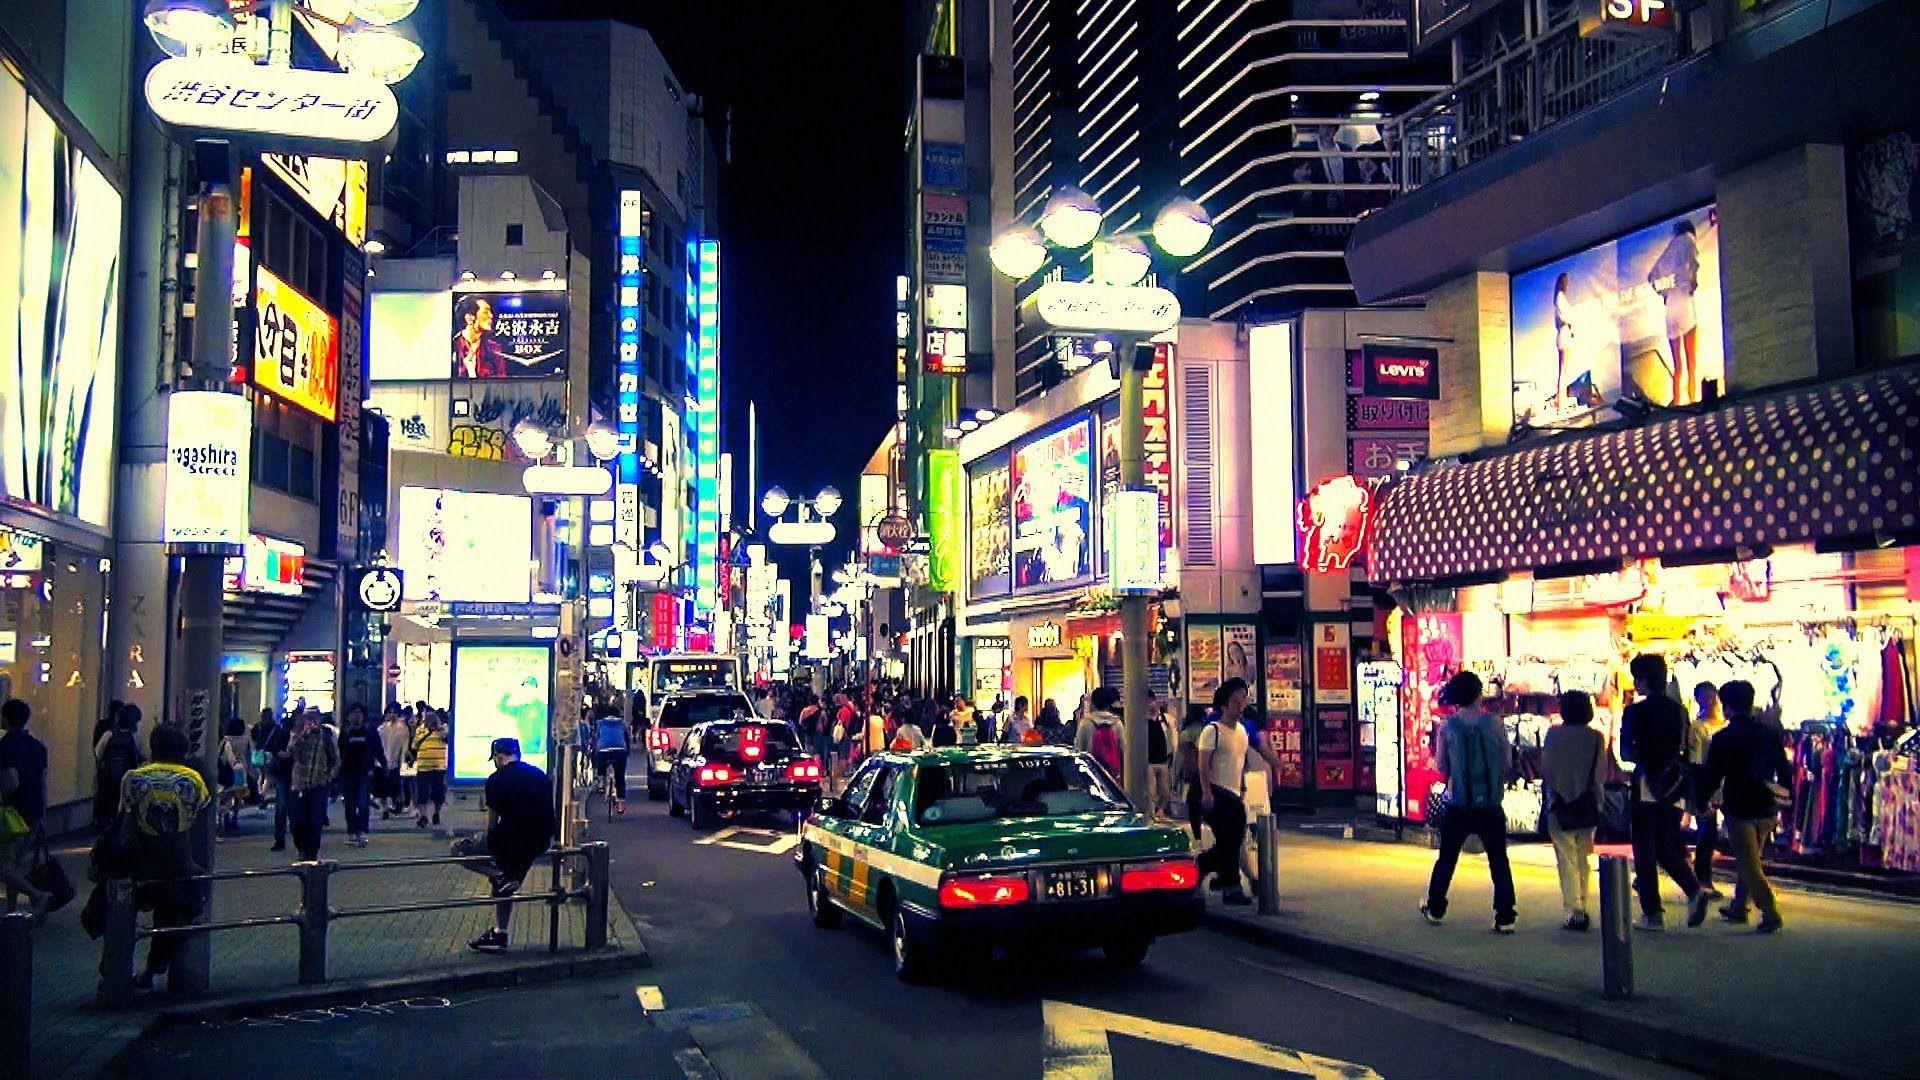 Streets around Shibuya Station at night / 夜 の 渋 谷 / Tokyo HD.